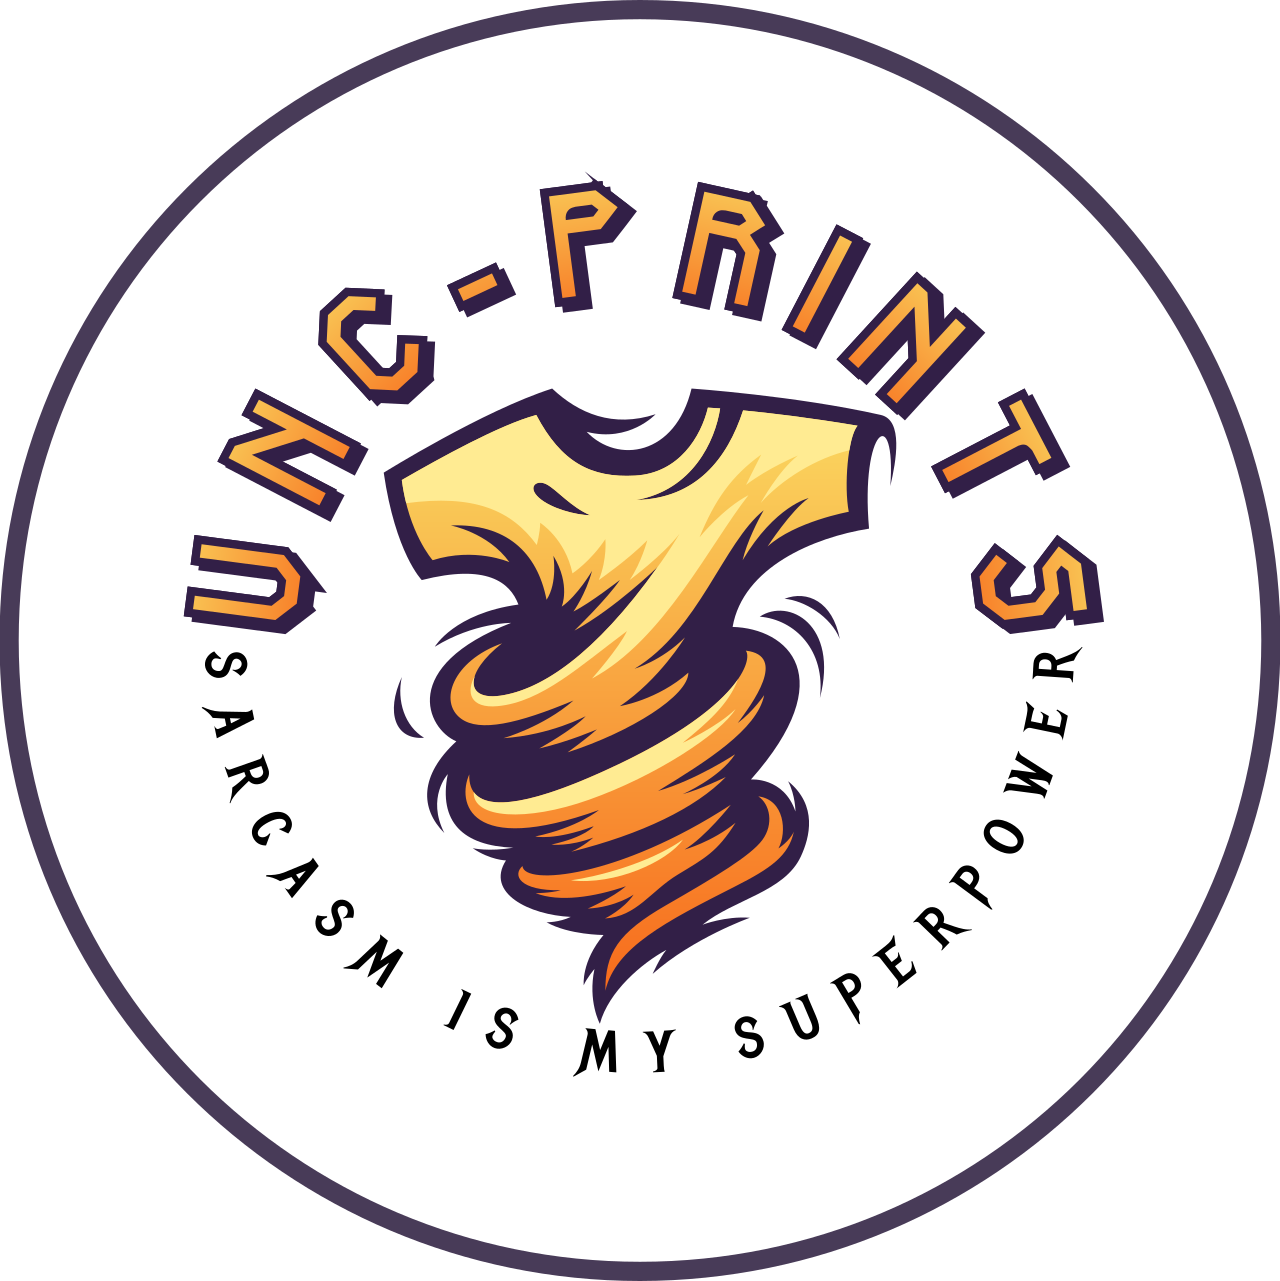 UNC-PRINTS's logo